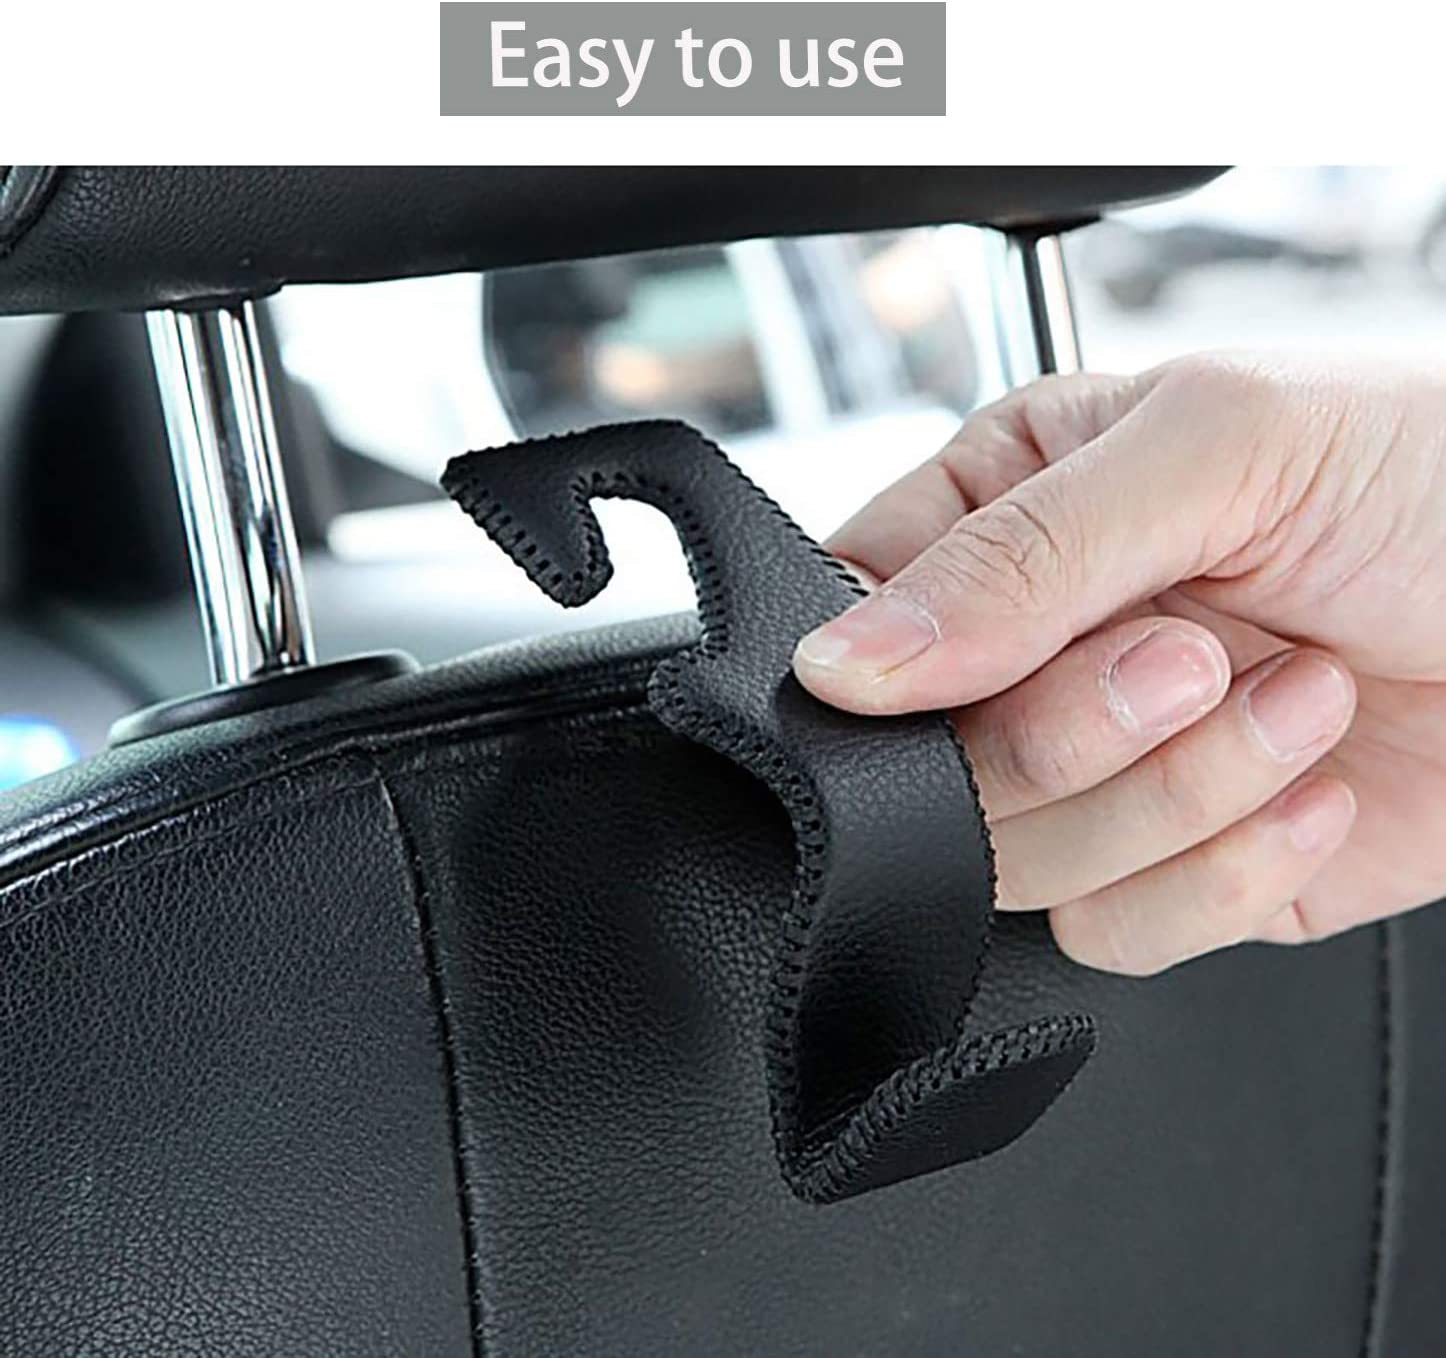  Headrest Hooks for Purses and Bags, Car Seat Hooks for Purse  Handbag Mask Coat Grocery Bag Water Bottle, 4 Pack : Automotive